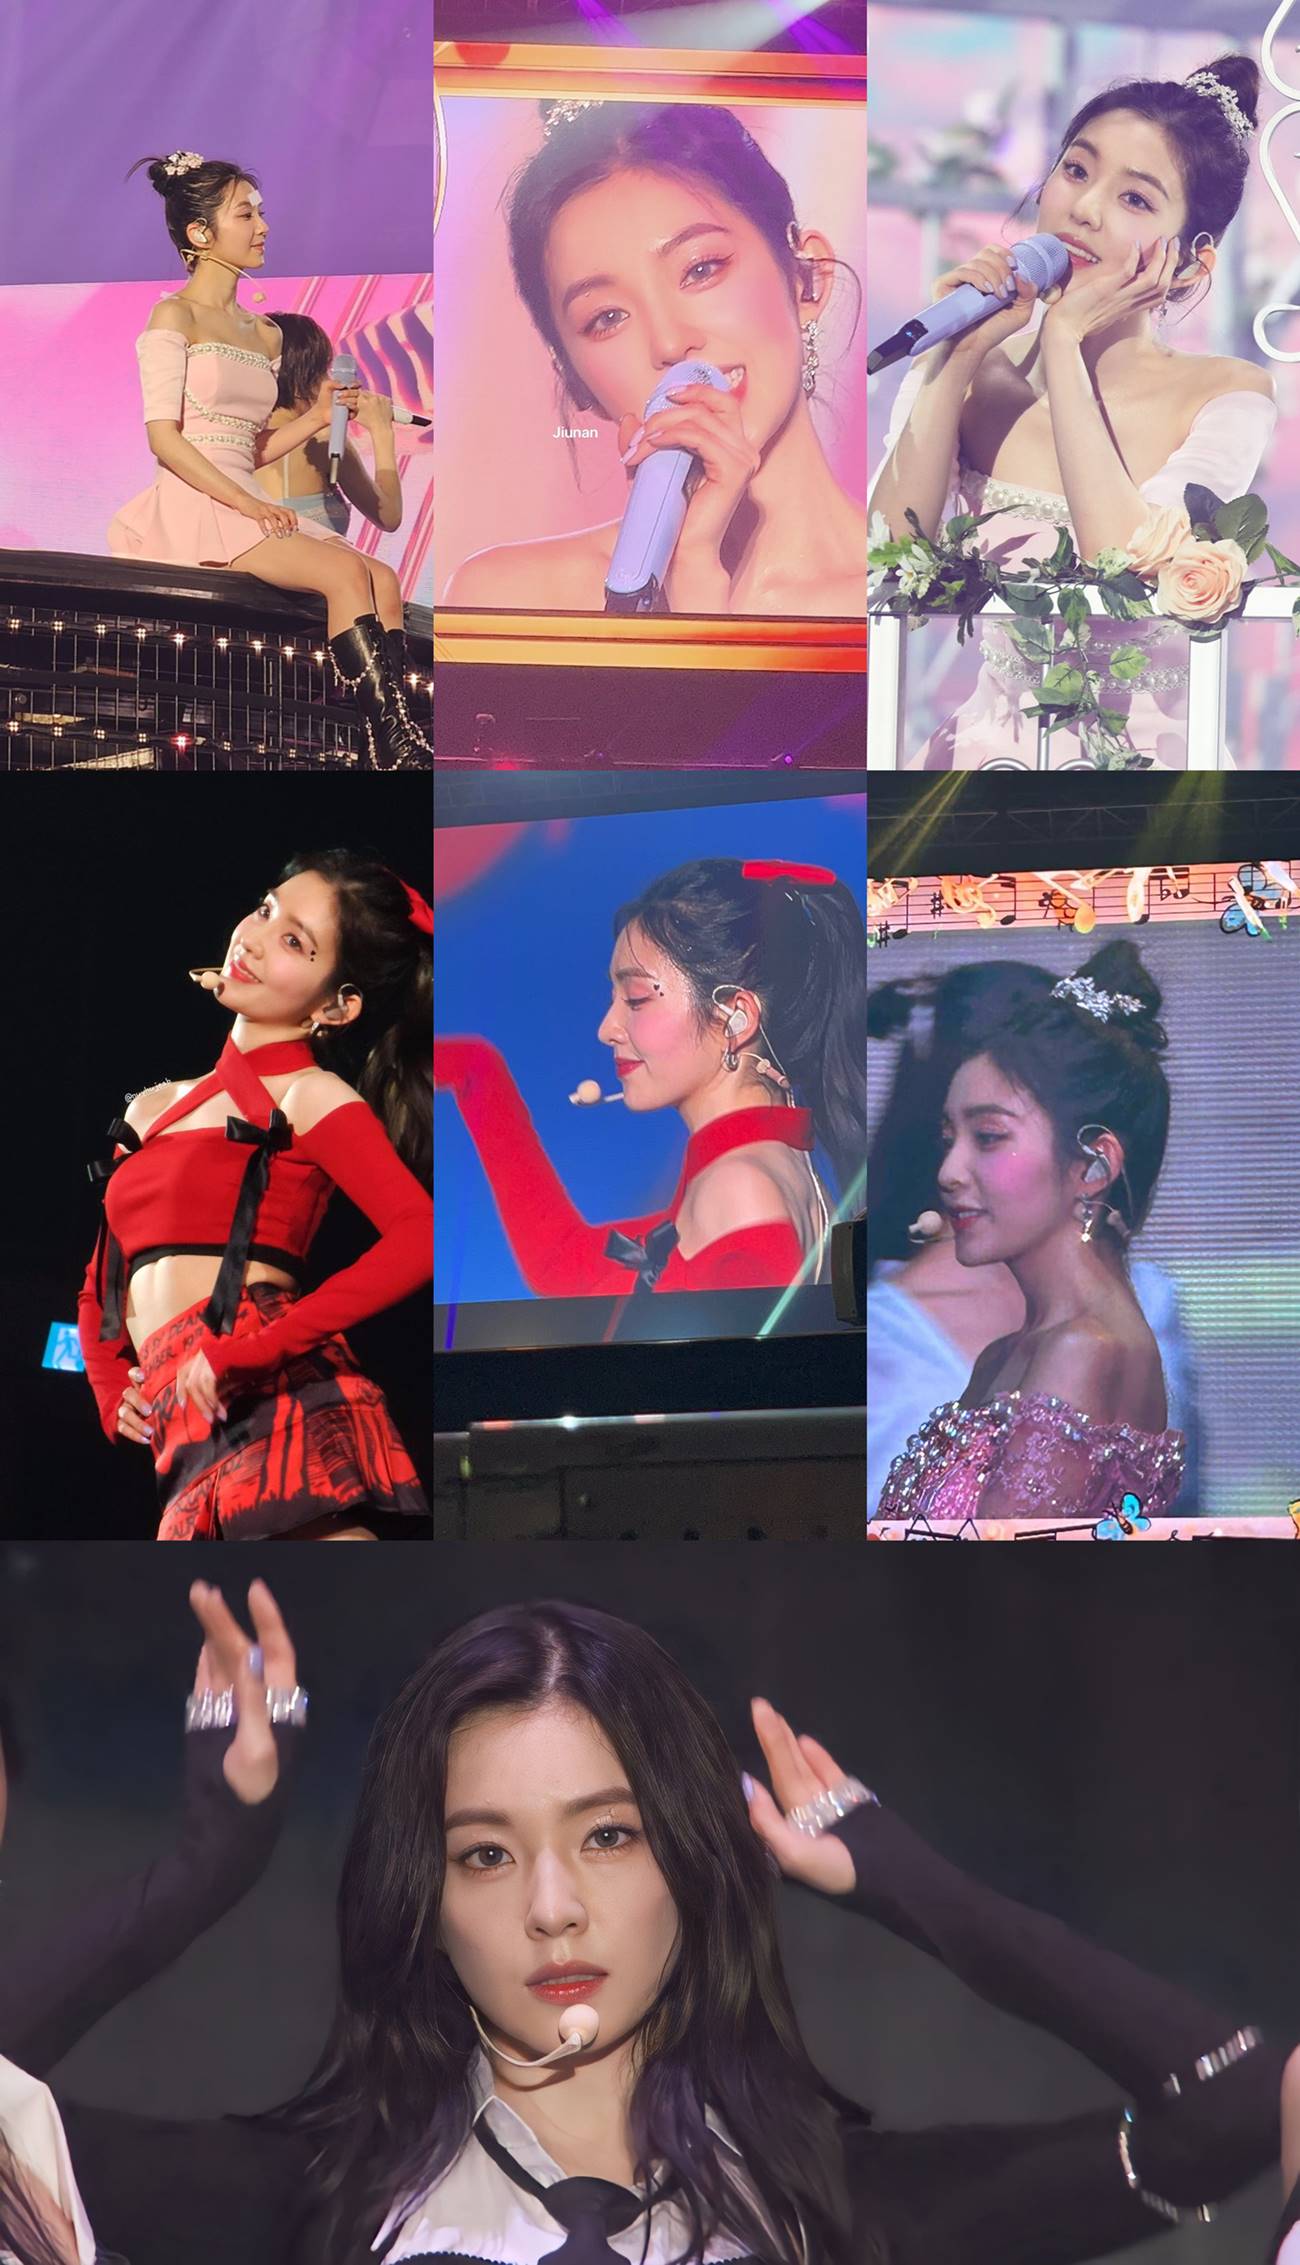 Foto-foto Irene Red Velvet selama konser menjadi sorotan